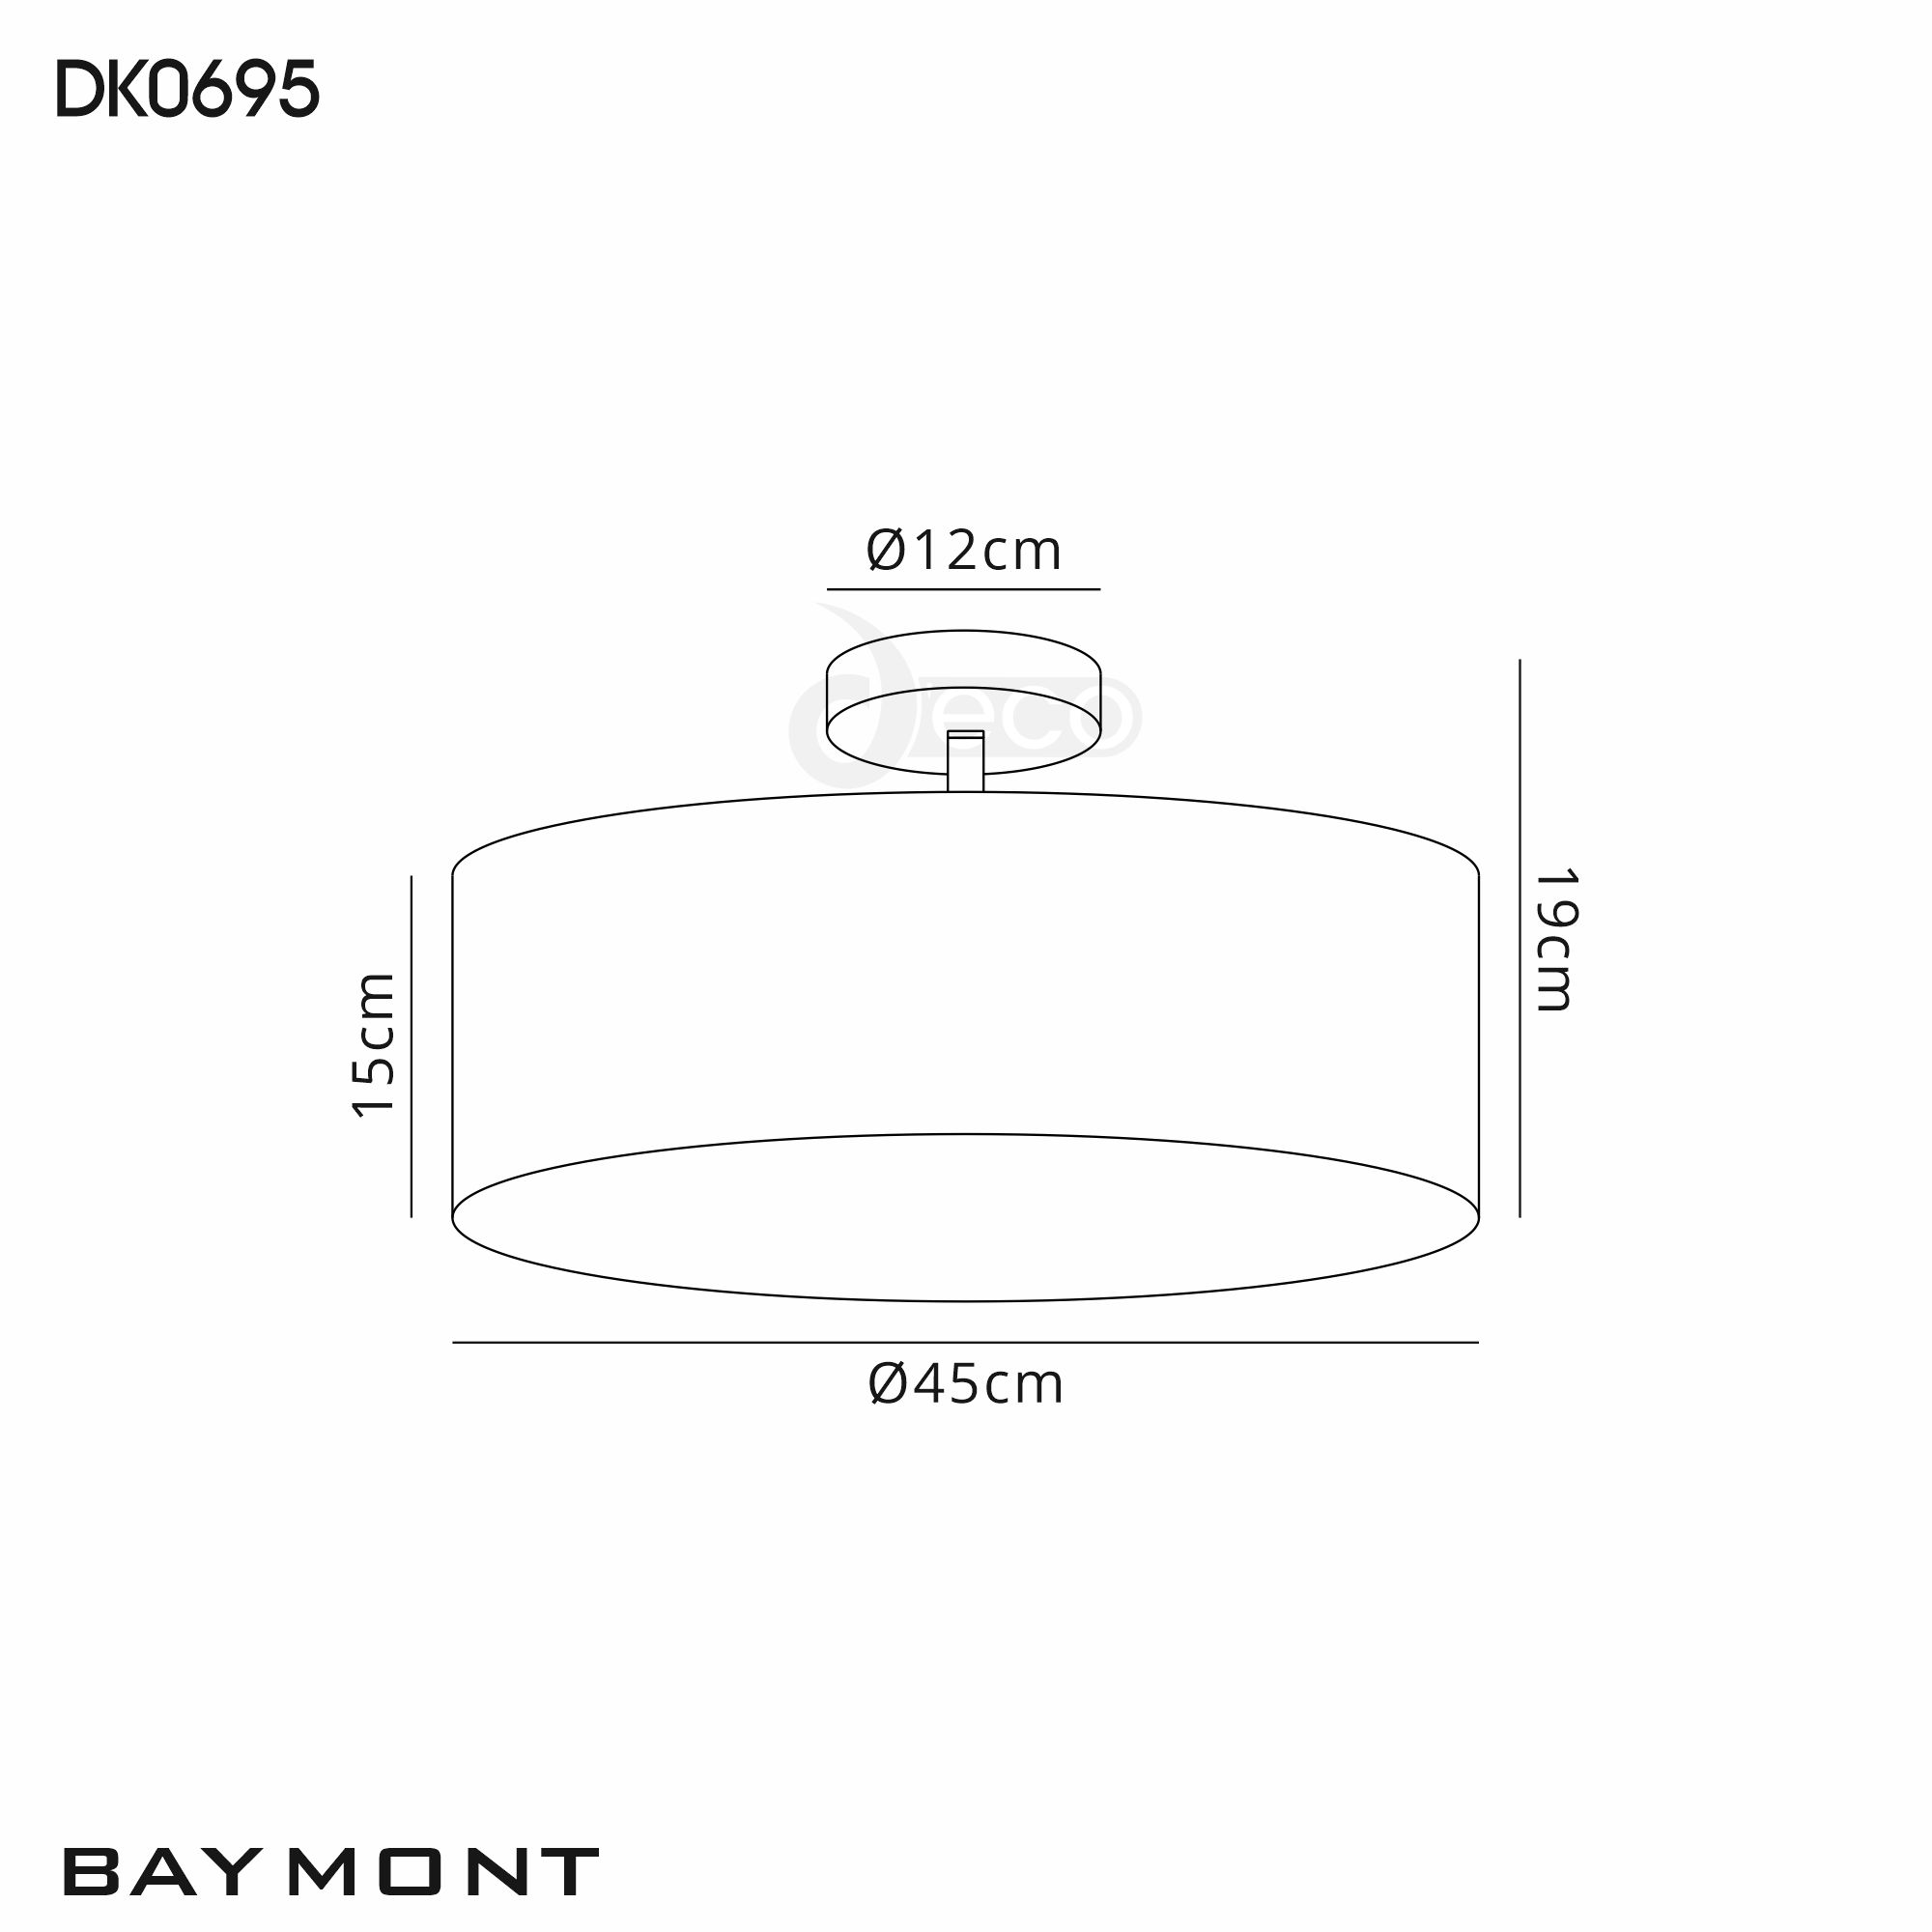 DK0695  Baymont 45cm, Semi Flush 3 Light Polished Chrome, Black/White